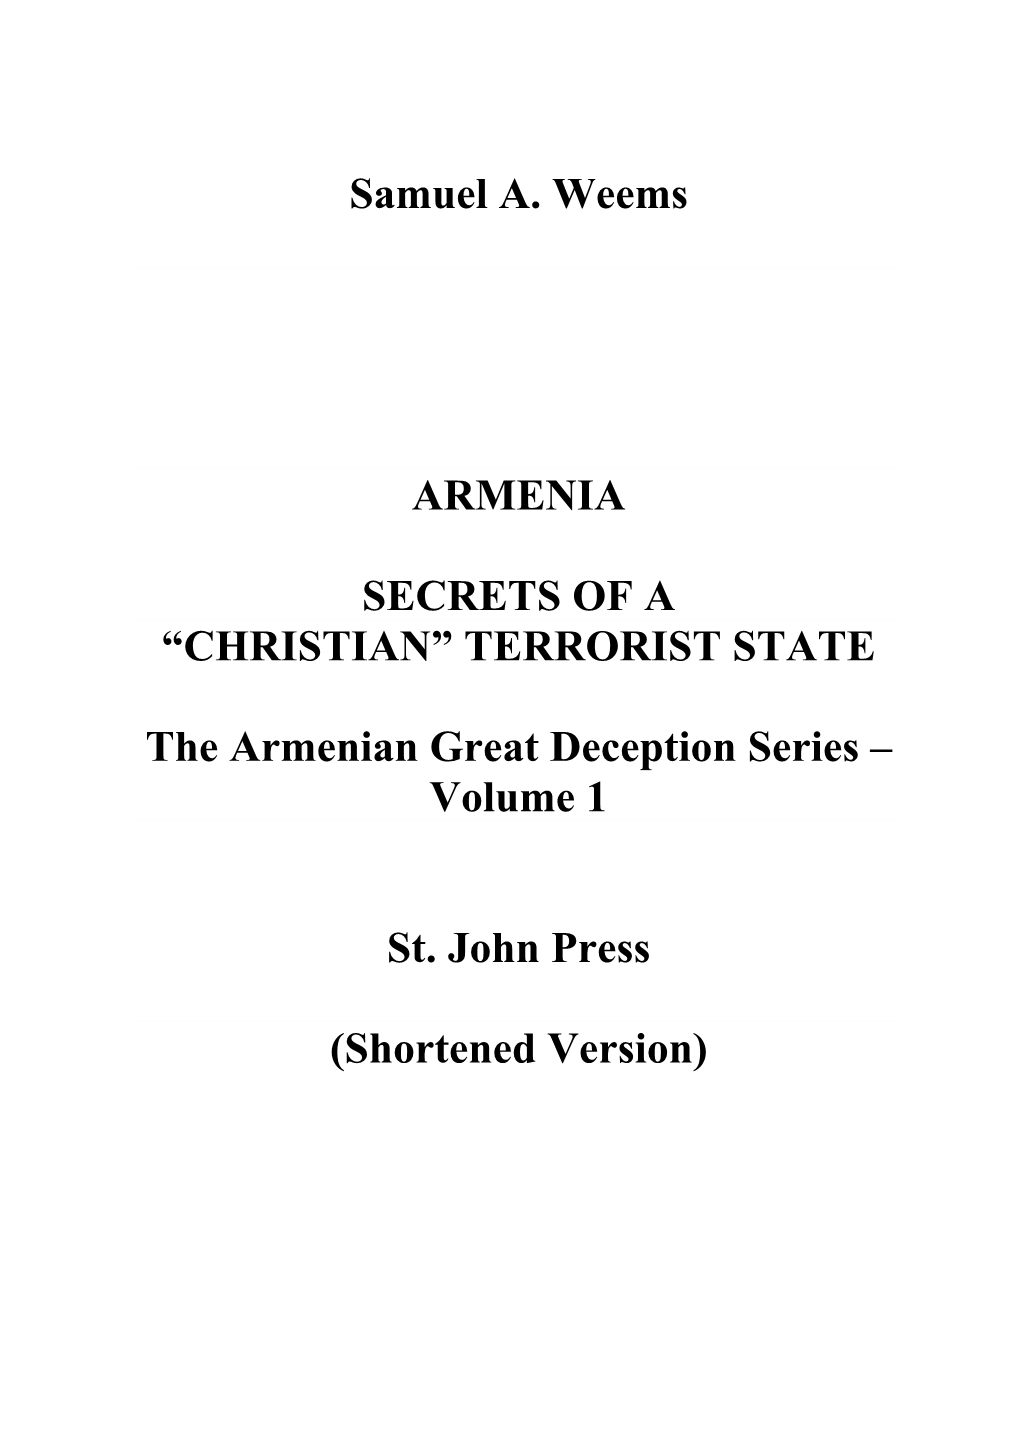 Samuel A. Weems ARMENIA SECRETS OF